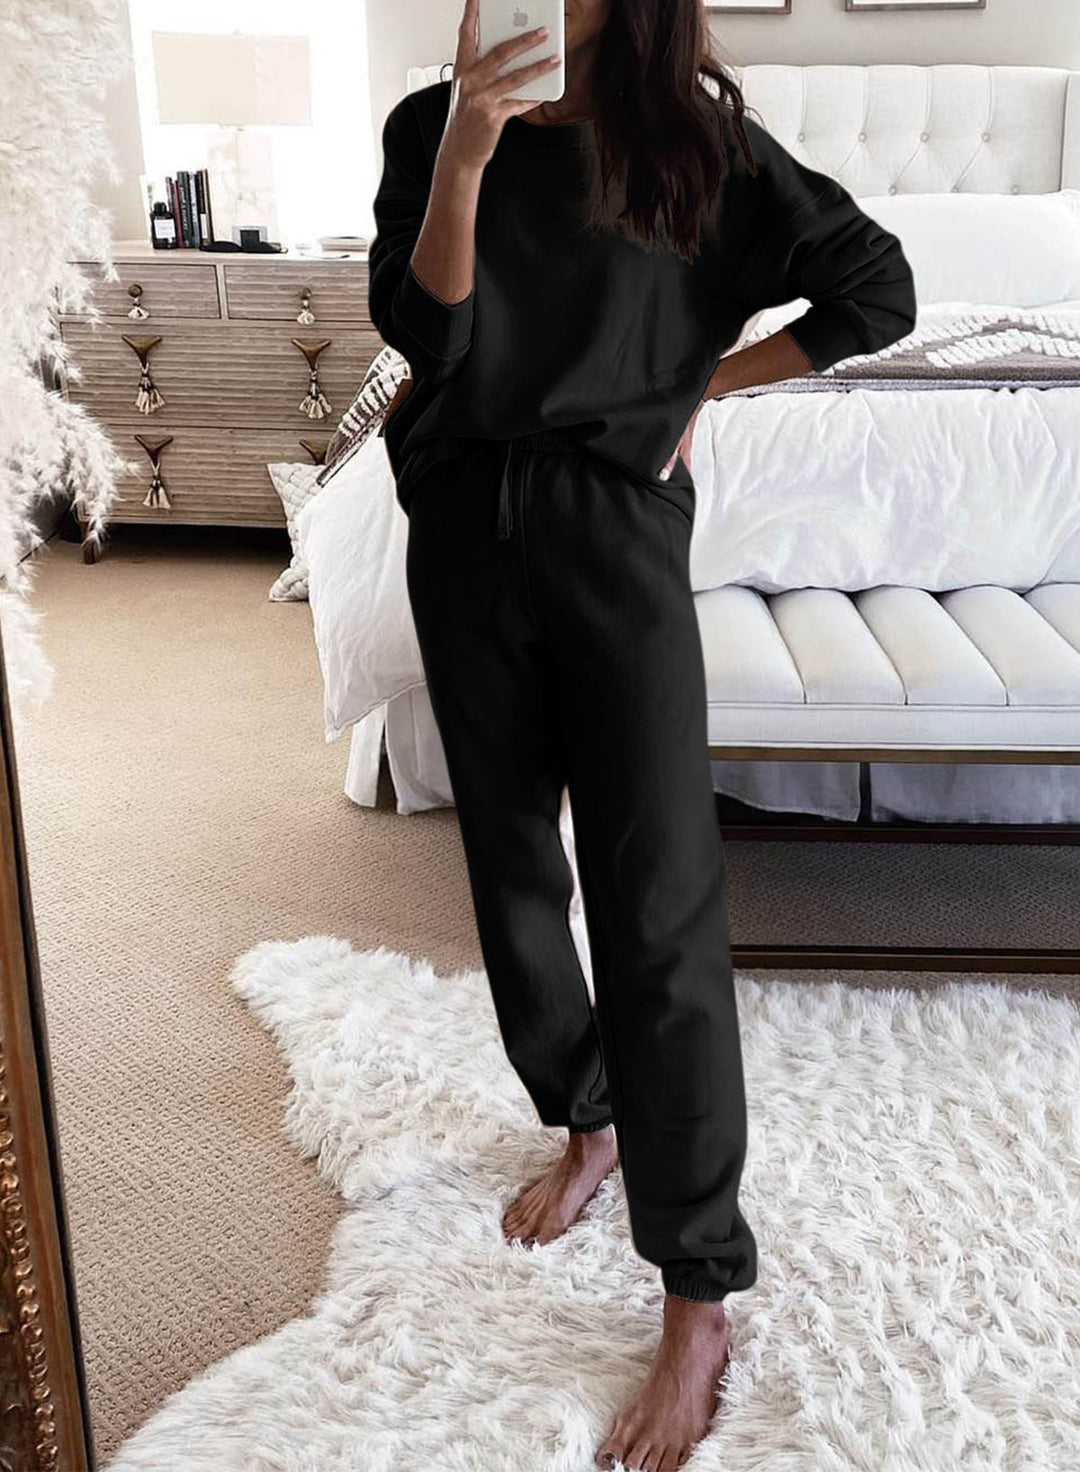 Gray or Black - 2pc Set -  Long Sleeve Top + Drawstring Pants - Lounge Outfit - Sizes S-XL Ti Amo I love you